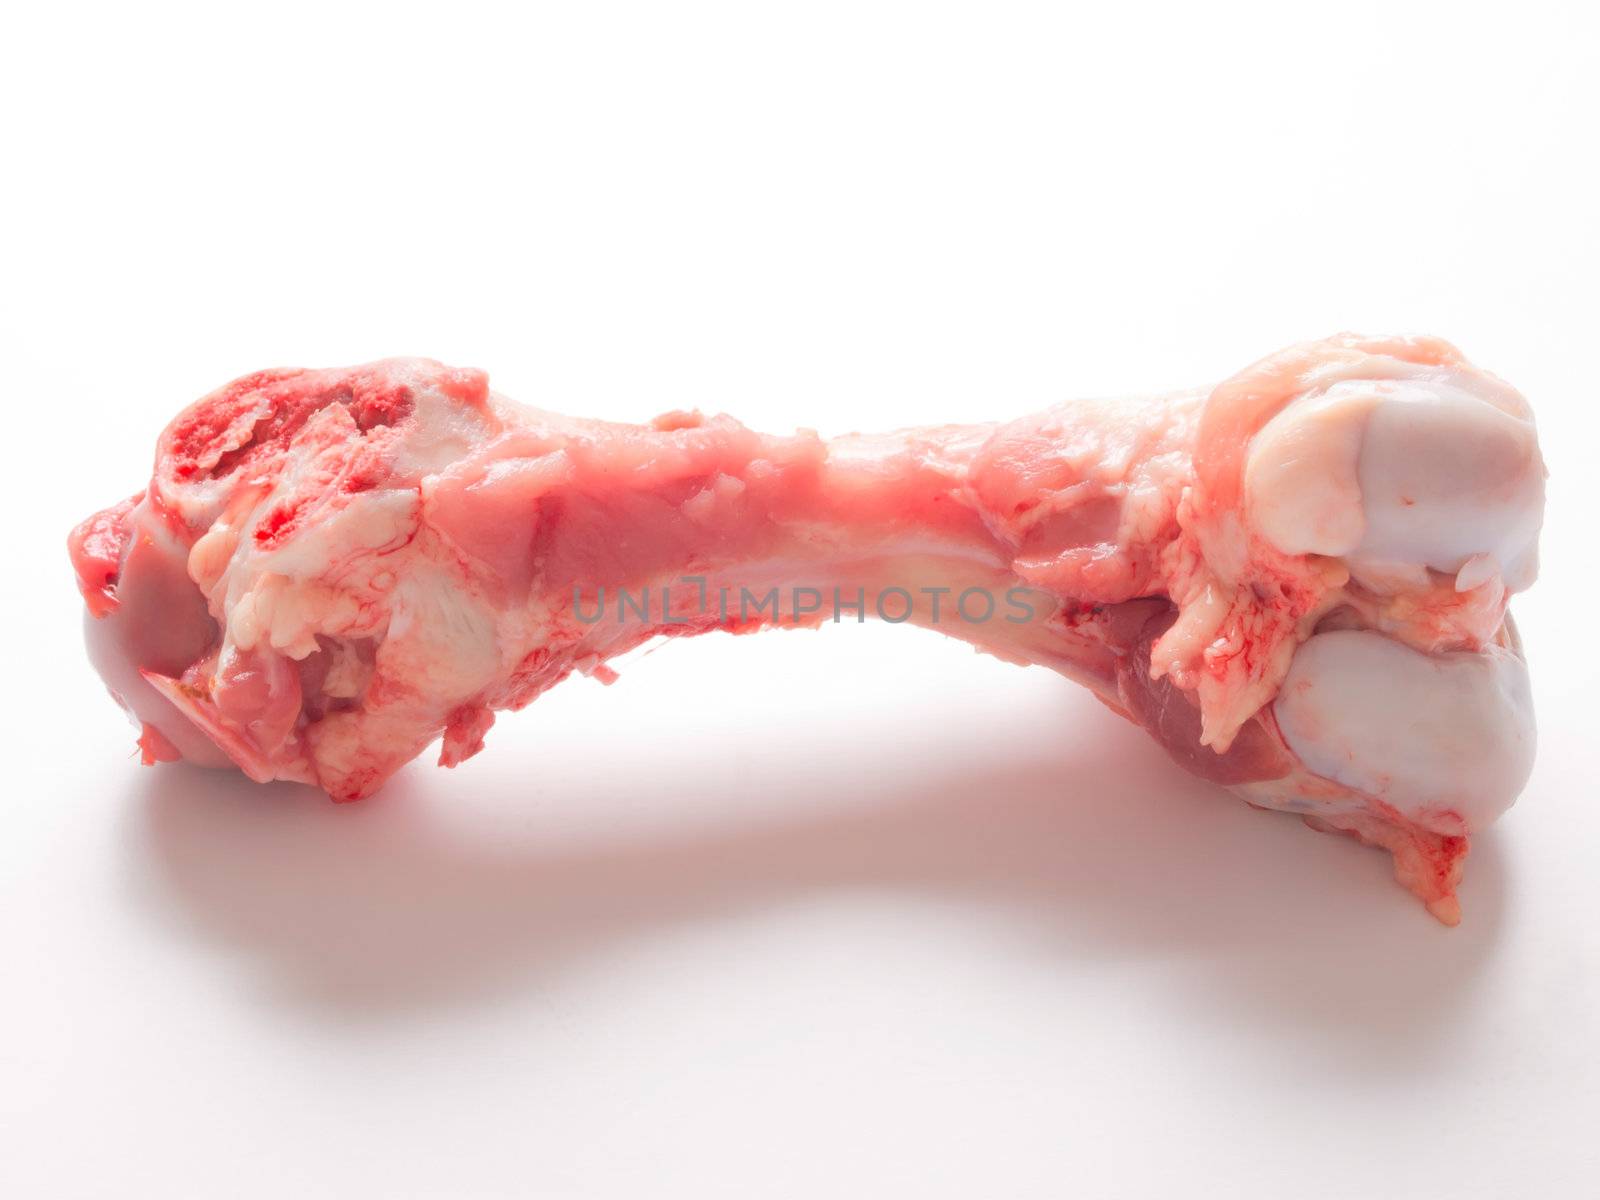 close up of a single pork bone on white